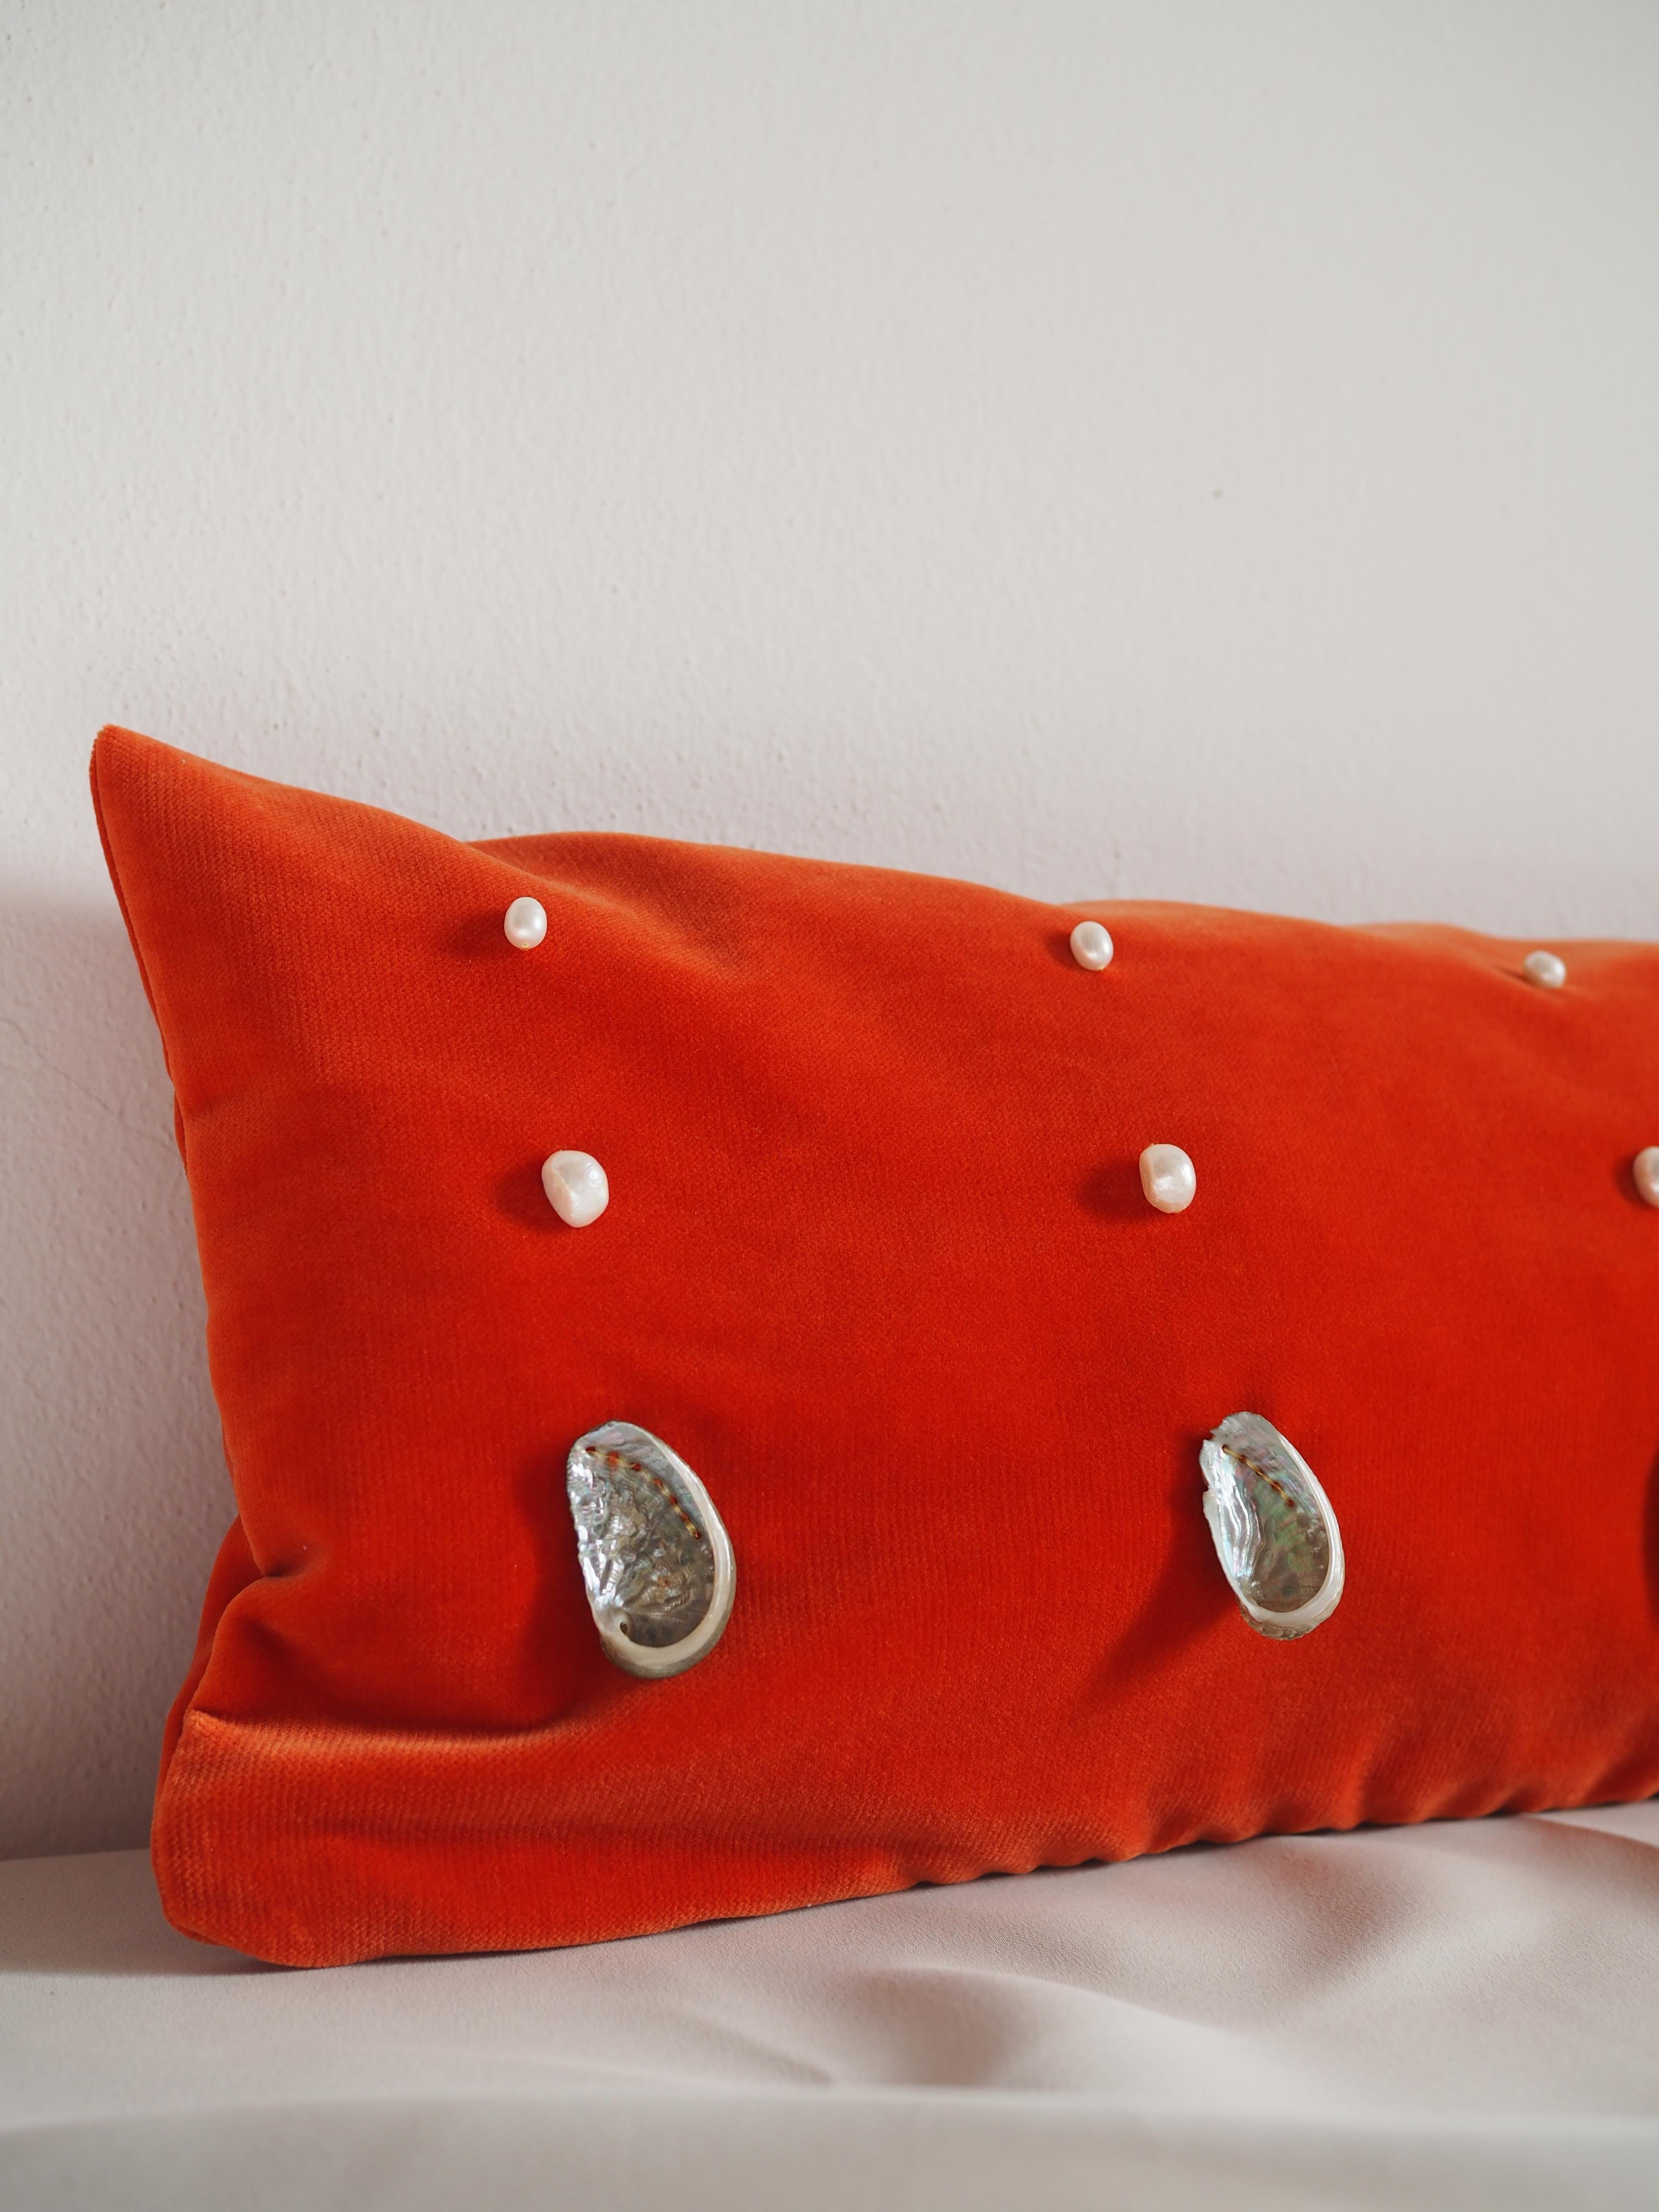 Spanish Bon Appetit 014 Decorative Cushion Culto Ponsoda 21st century desingn For Sale